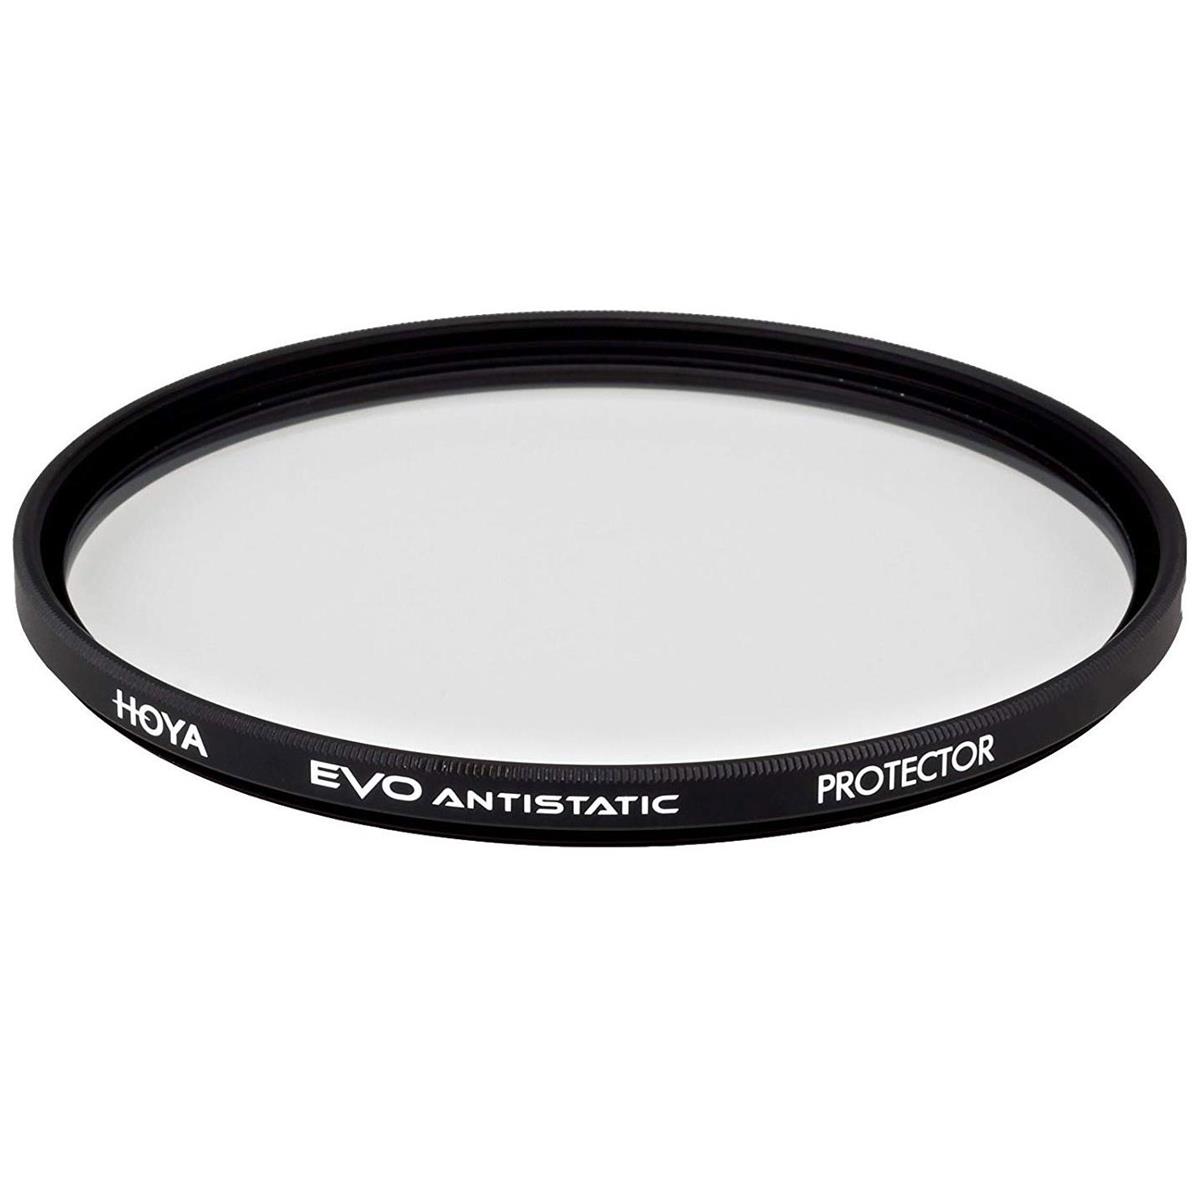 Hoya Evo Antistatic Protector Filter - 58mm